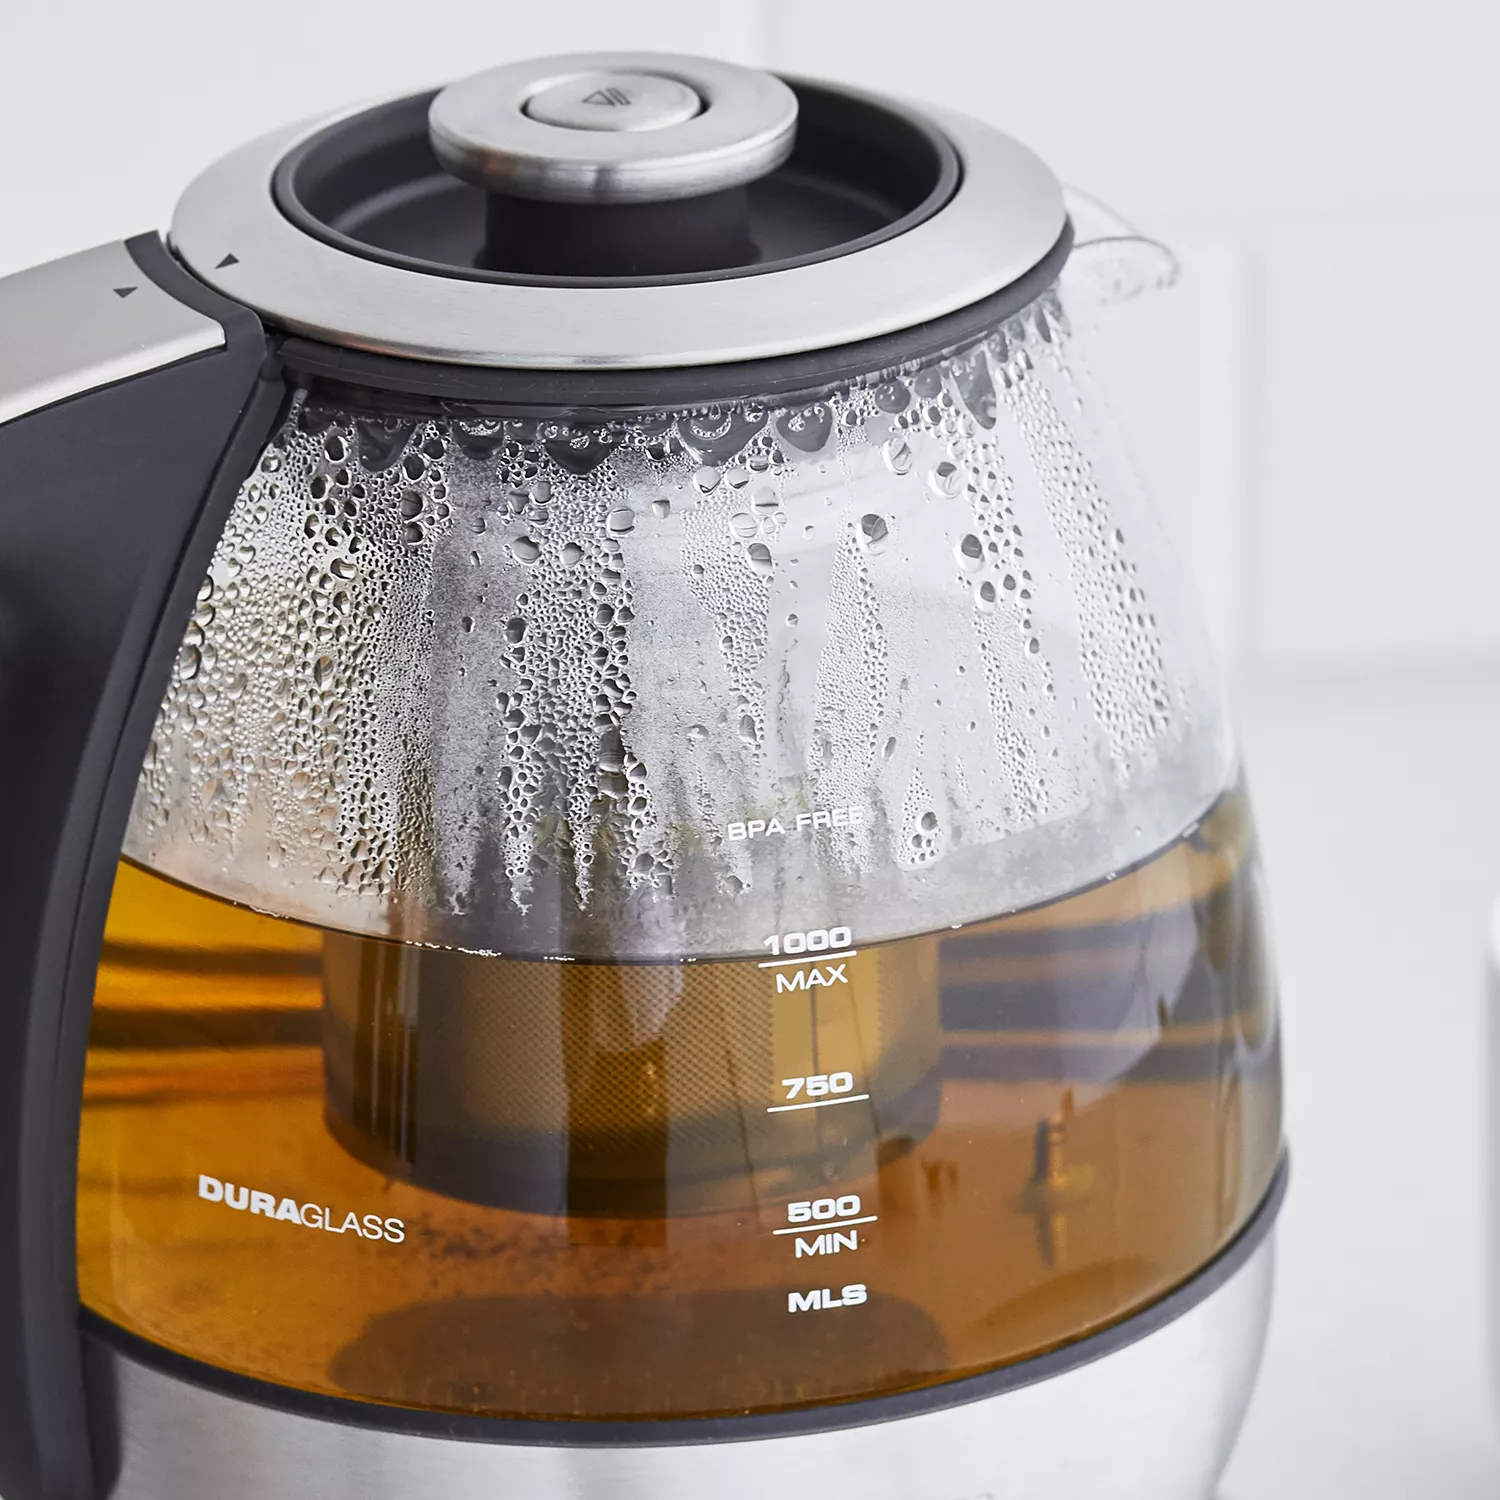 Breville Compact Smart Tea Infuser